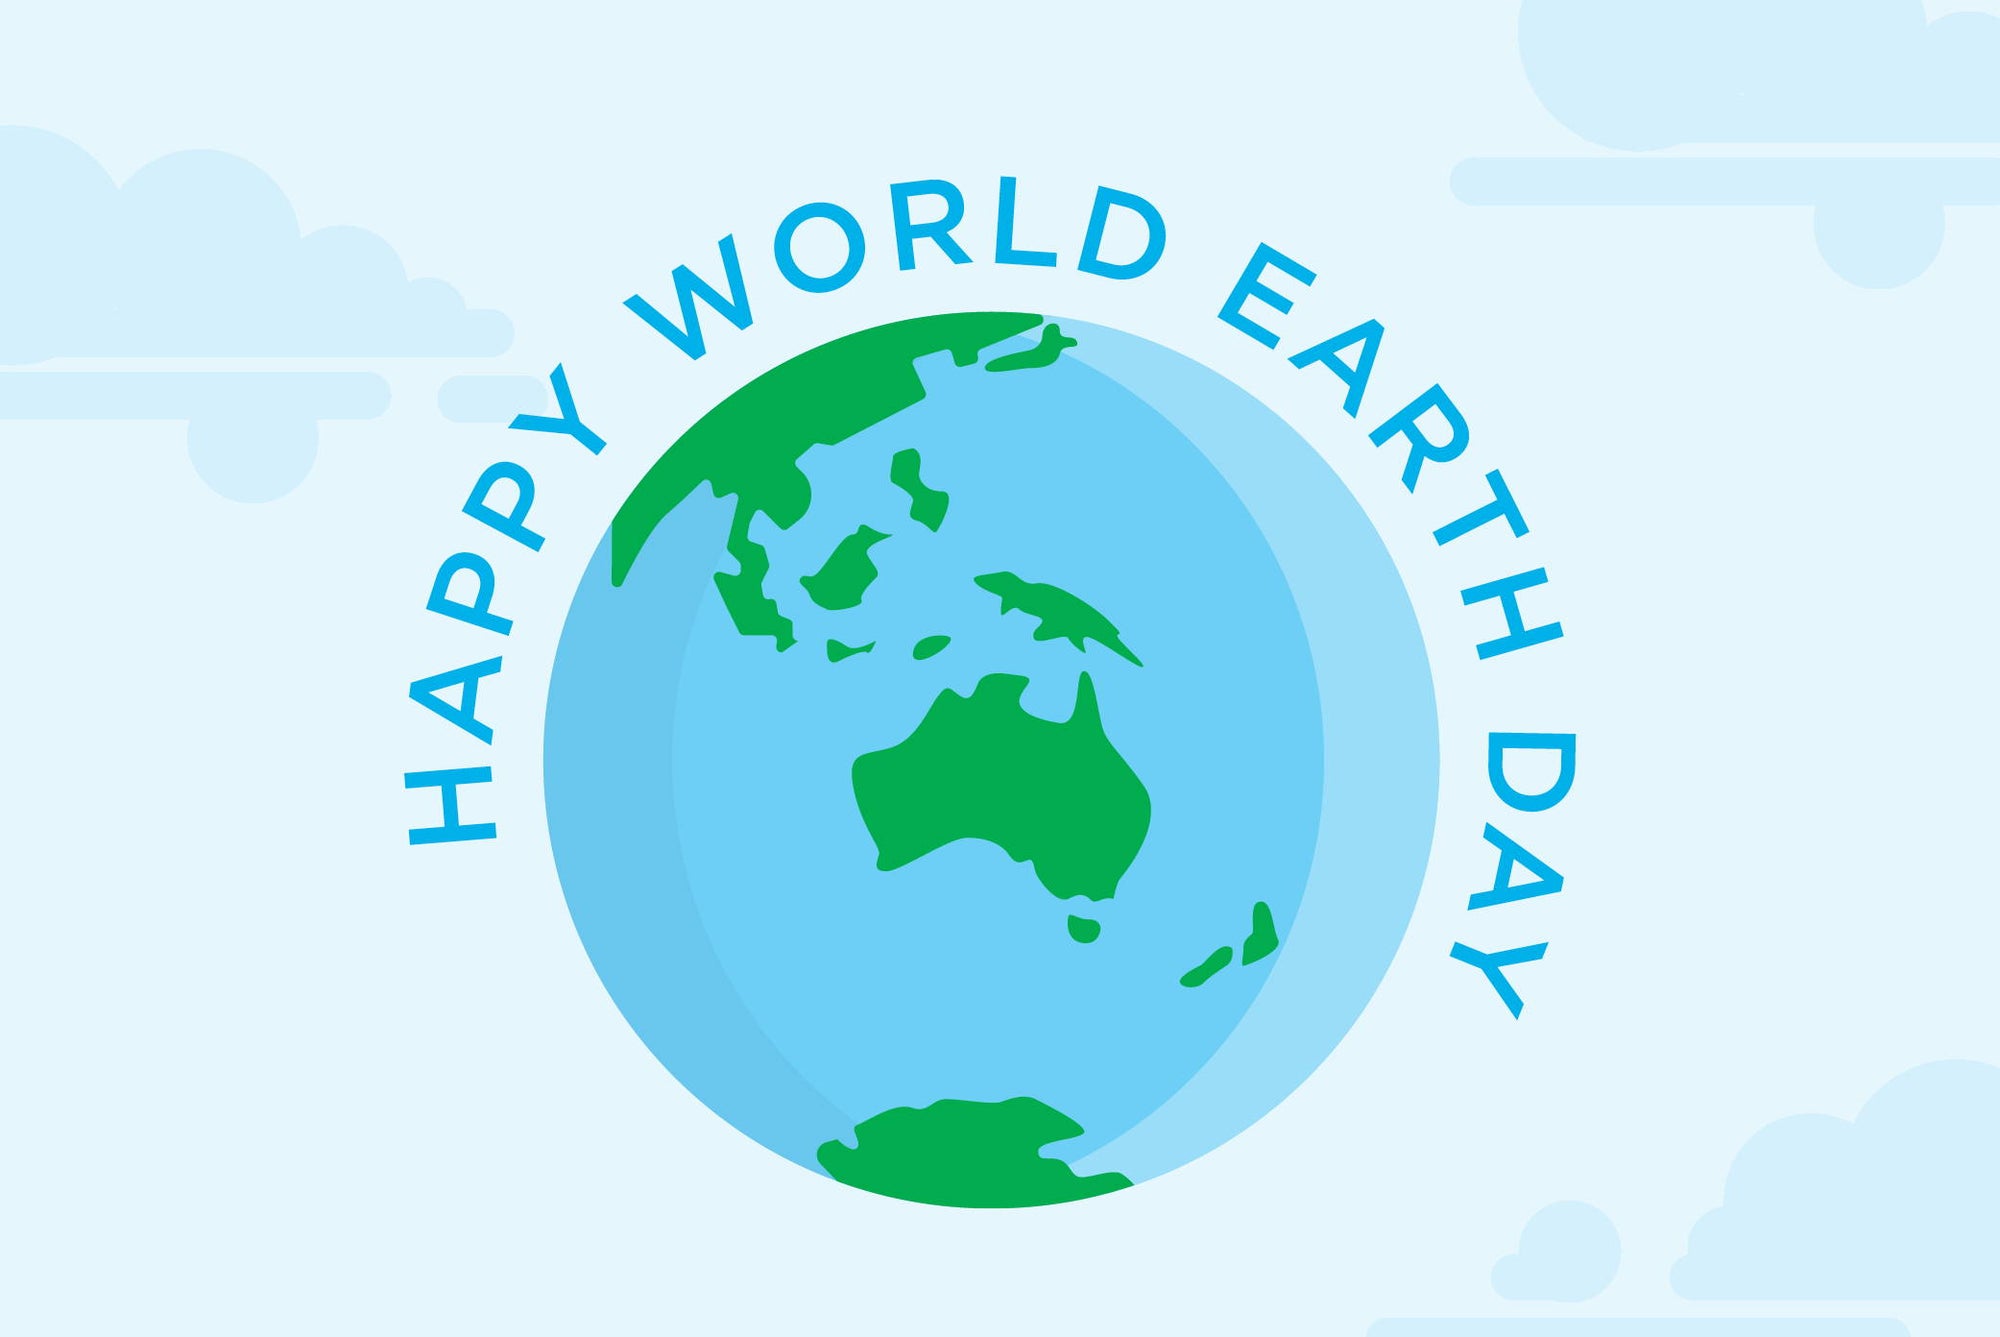 Celebrate World Earth Day